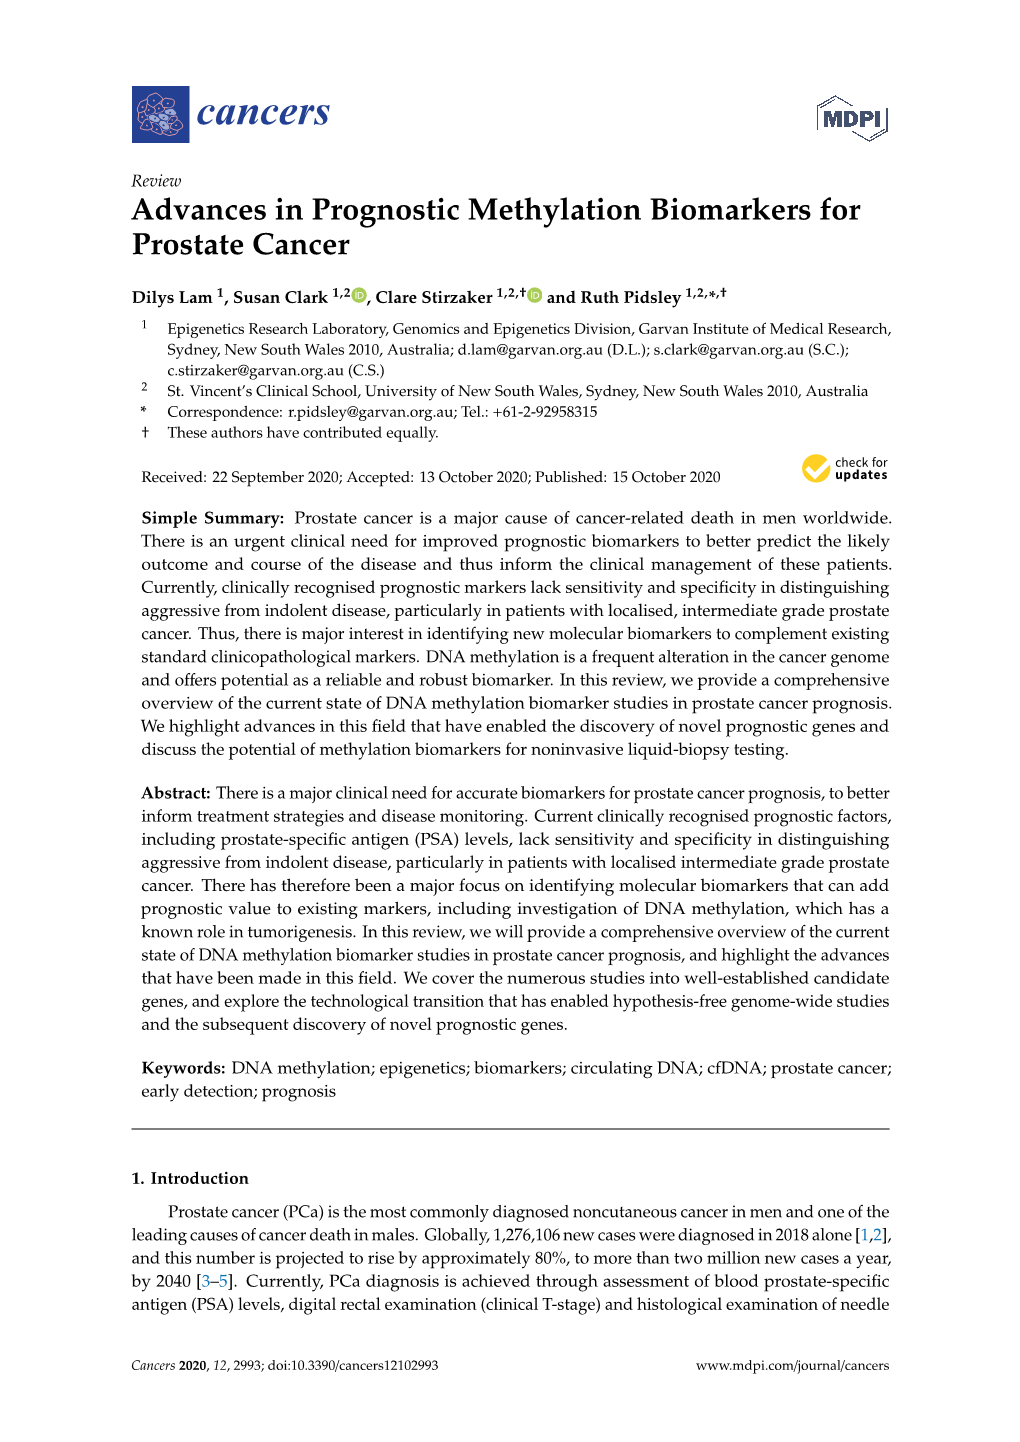 Advances in Prognostic Methylation Biomarkers for Prostate Cancer